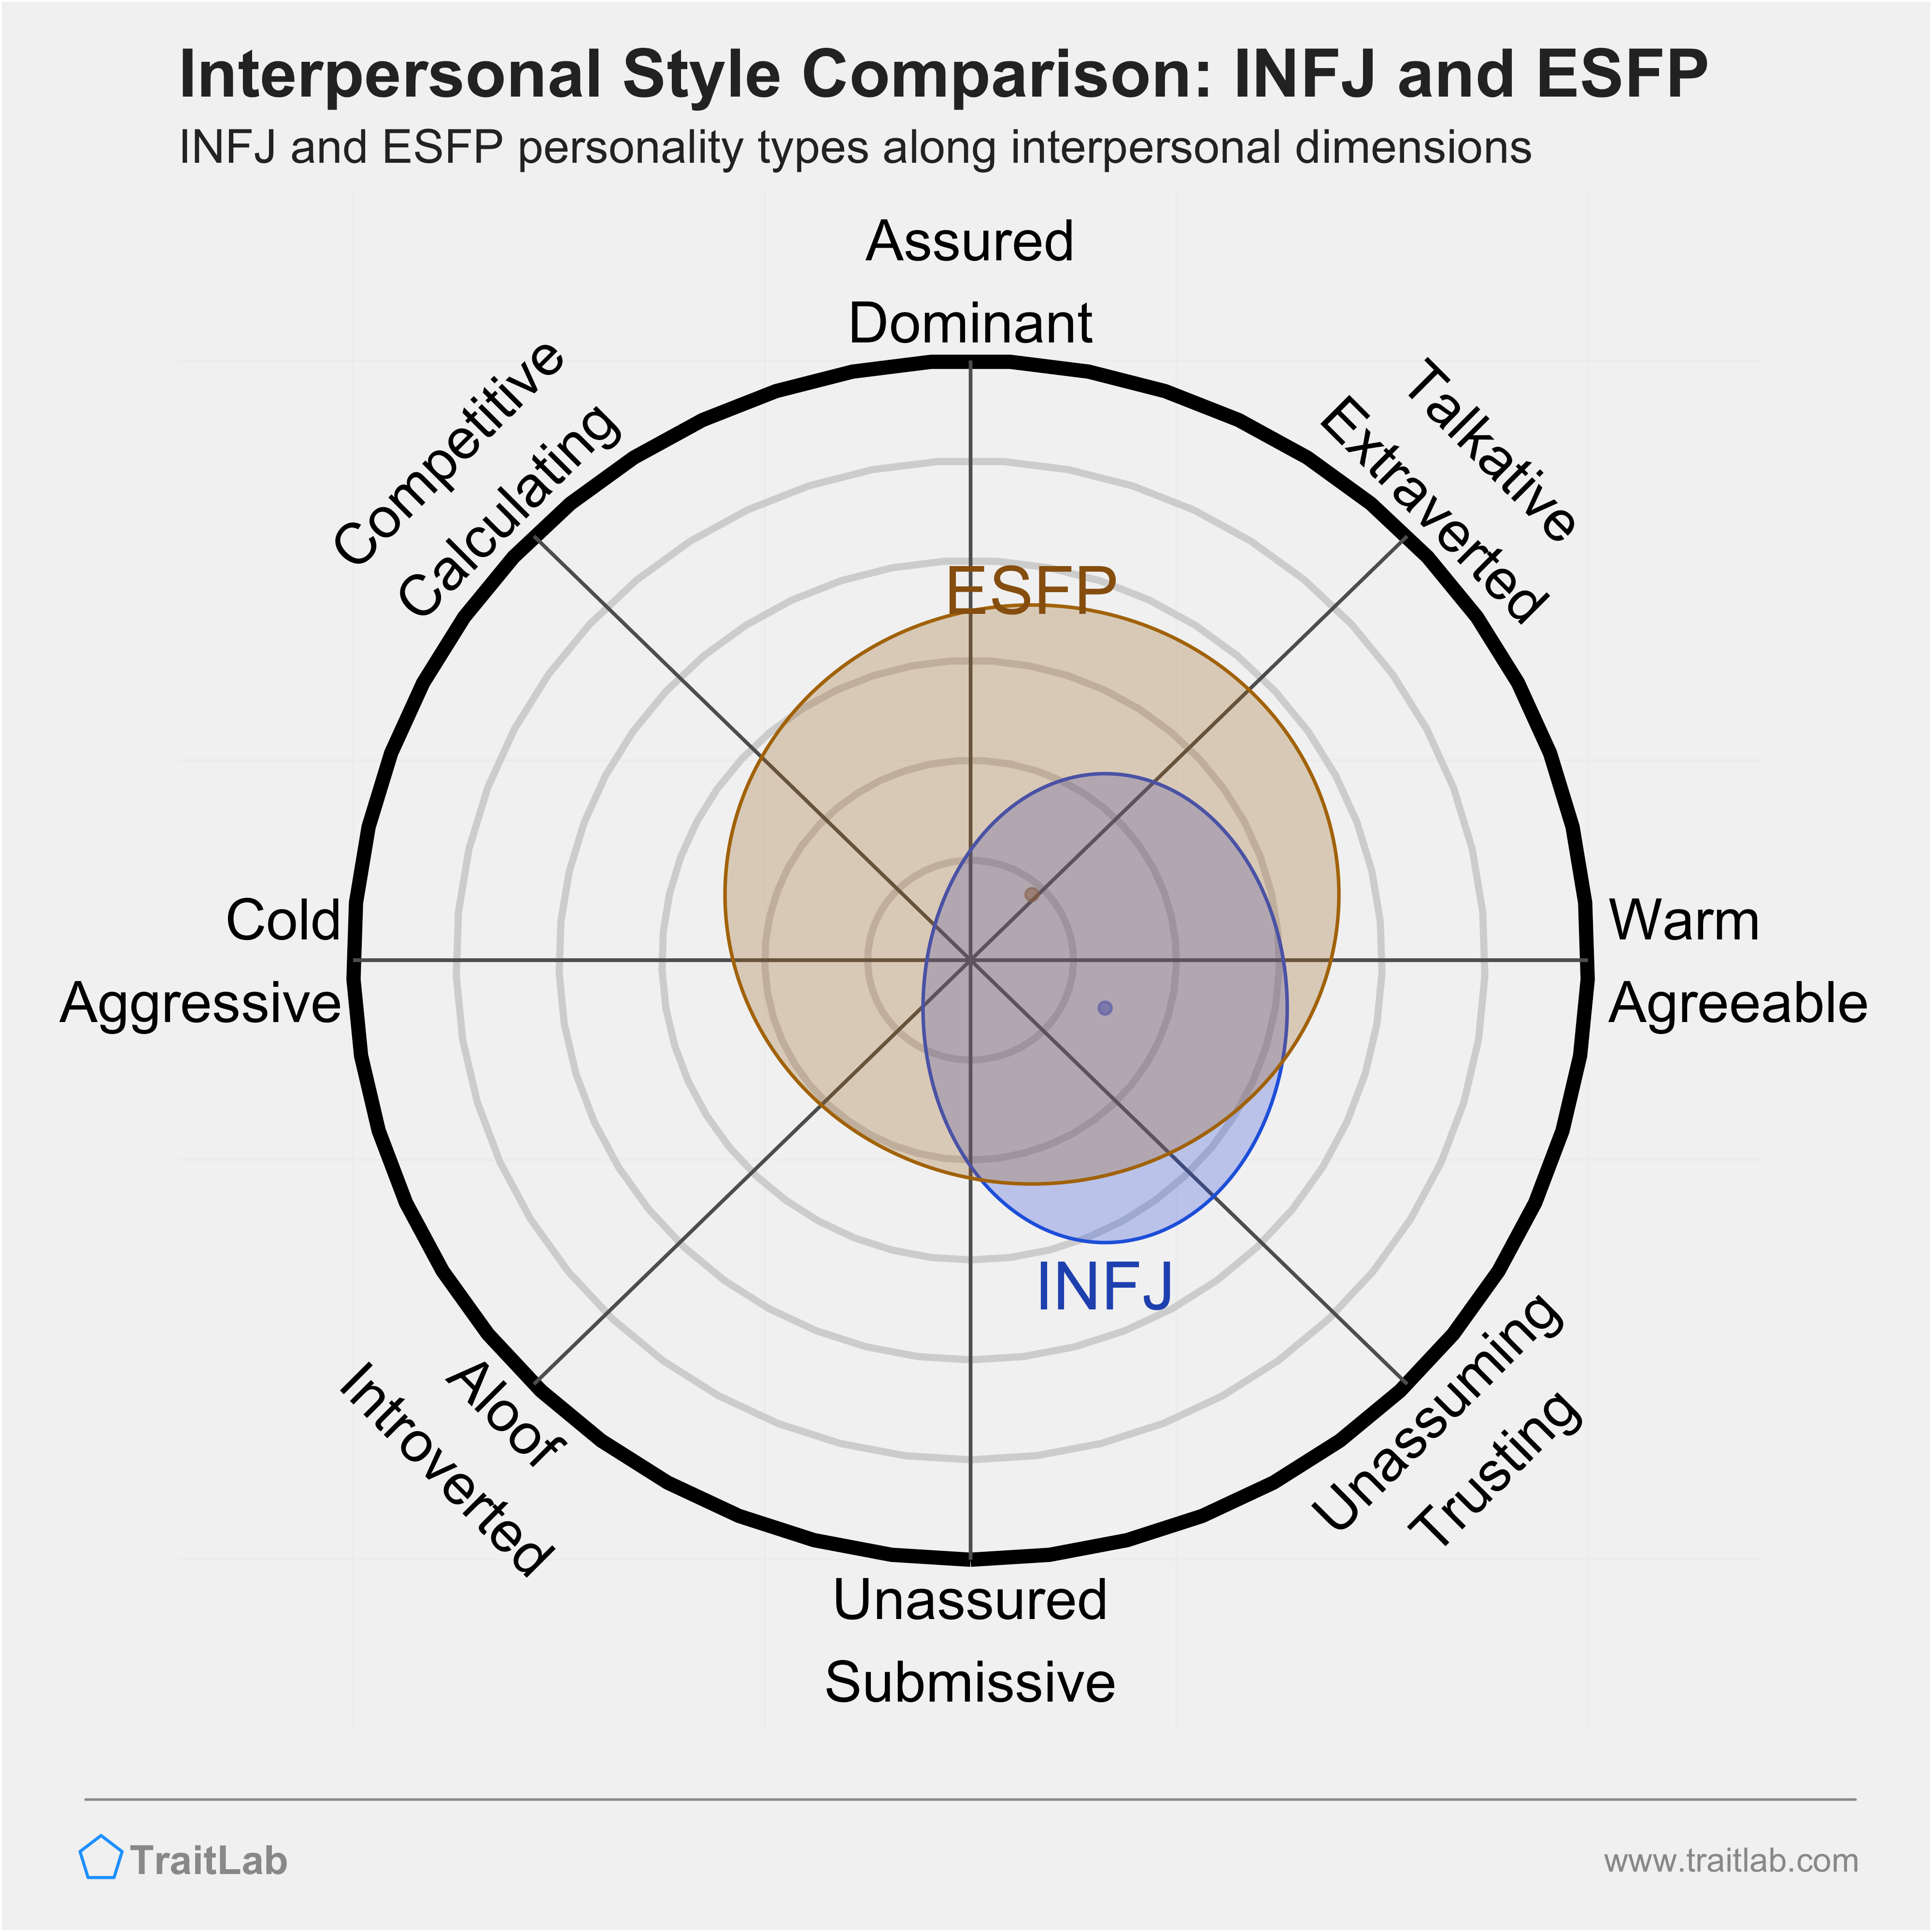 INFJ and ESFP comparison across interpersonal dimensions